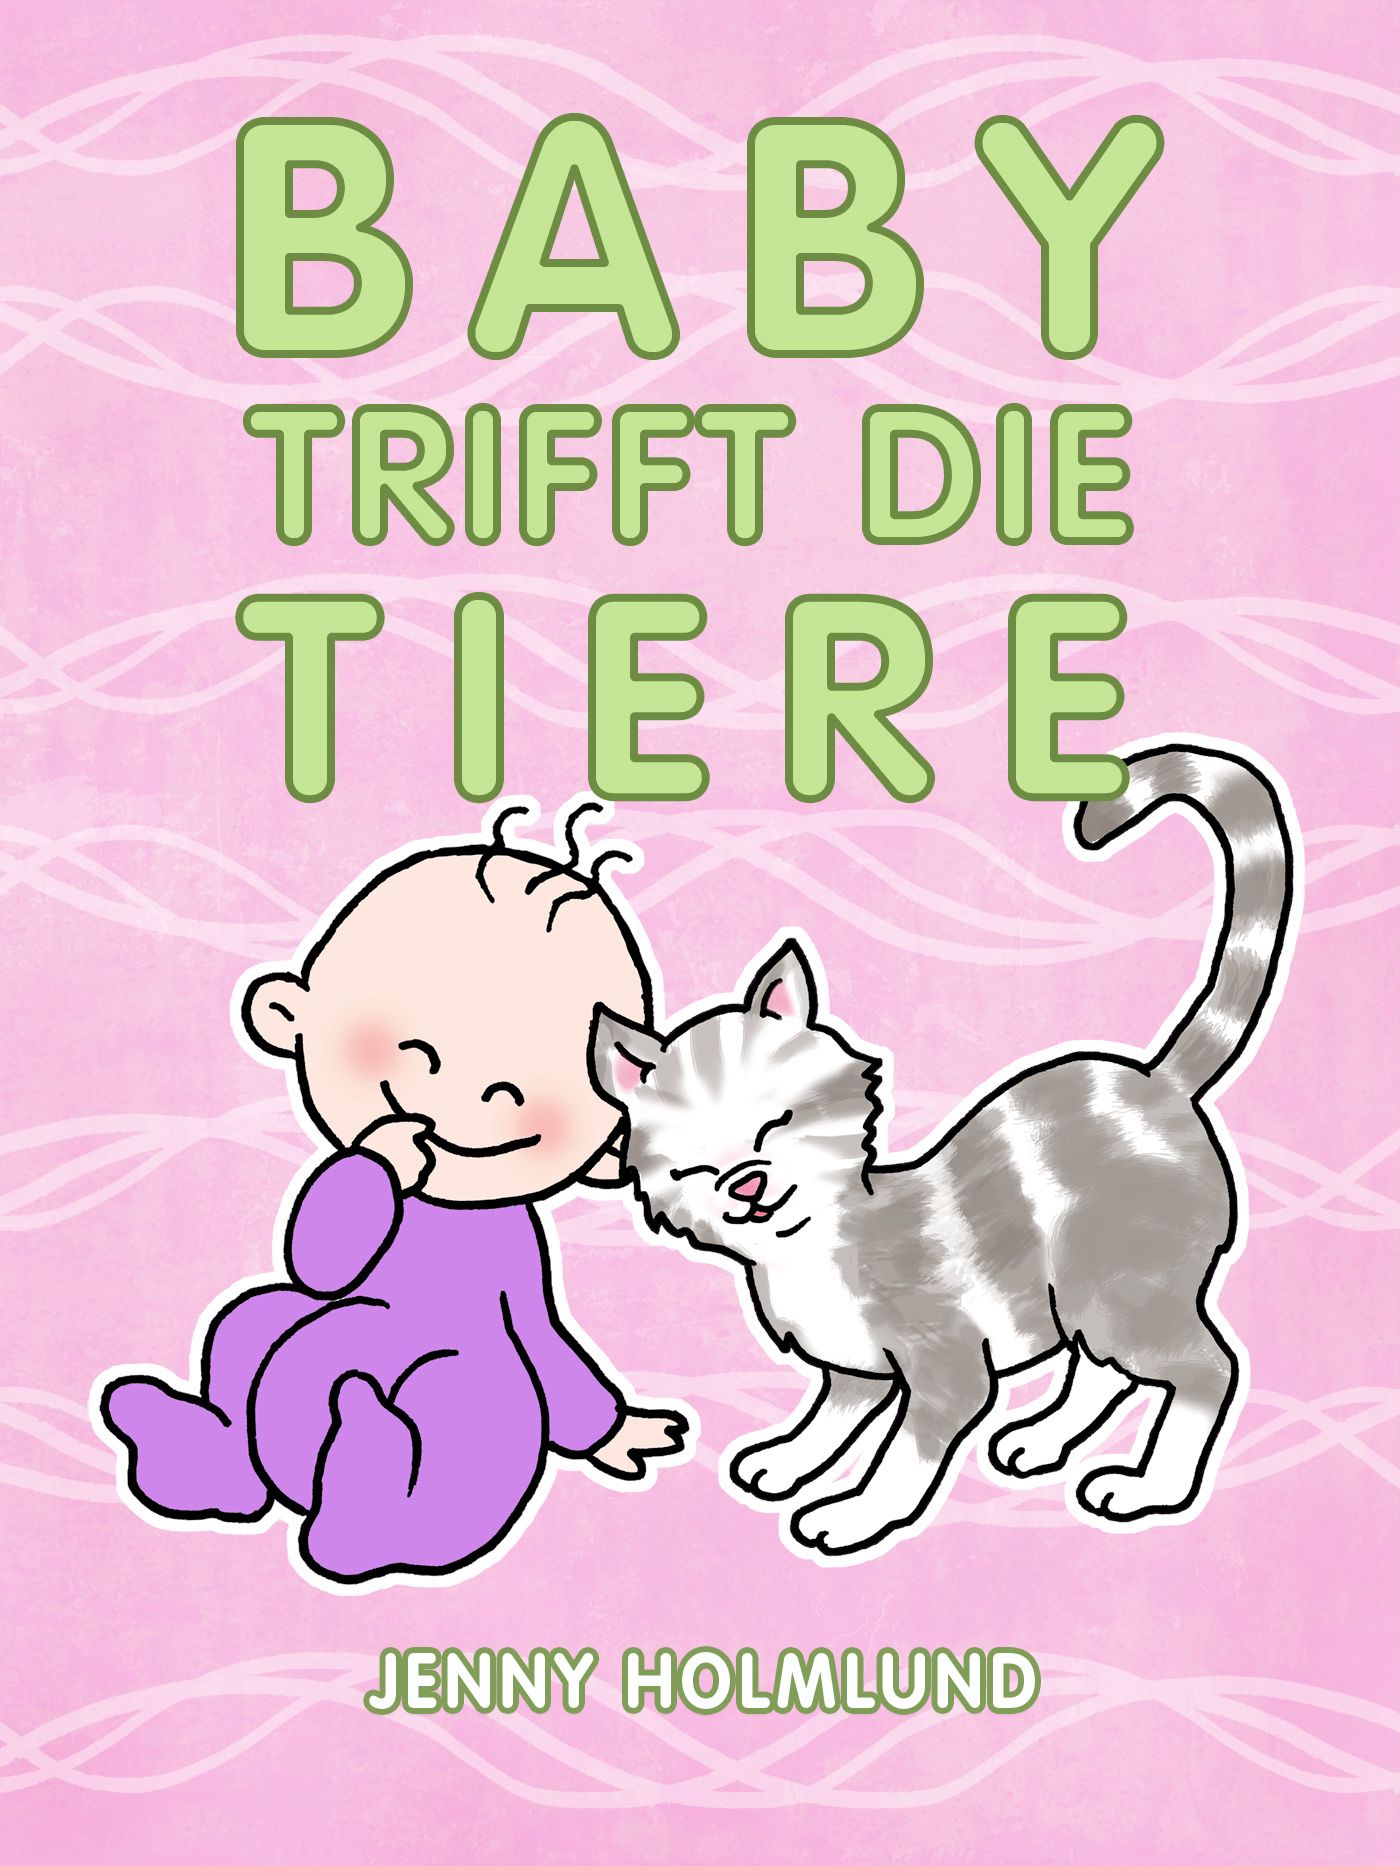 Baby Trifft die Tiere, eBook by Jenny Holmlund